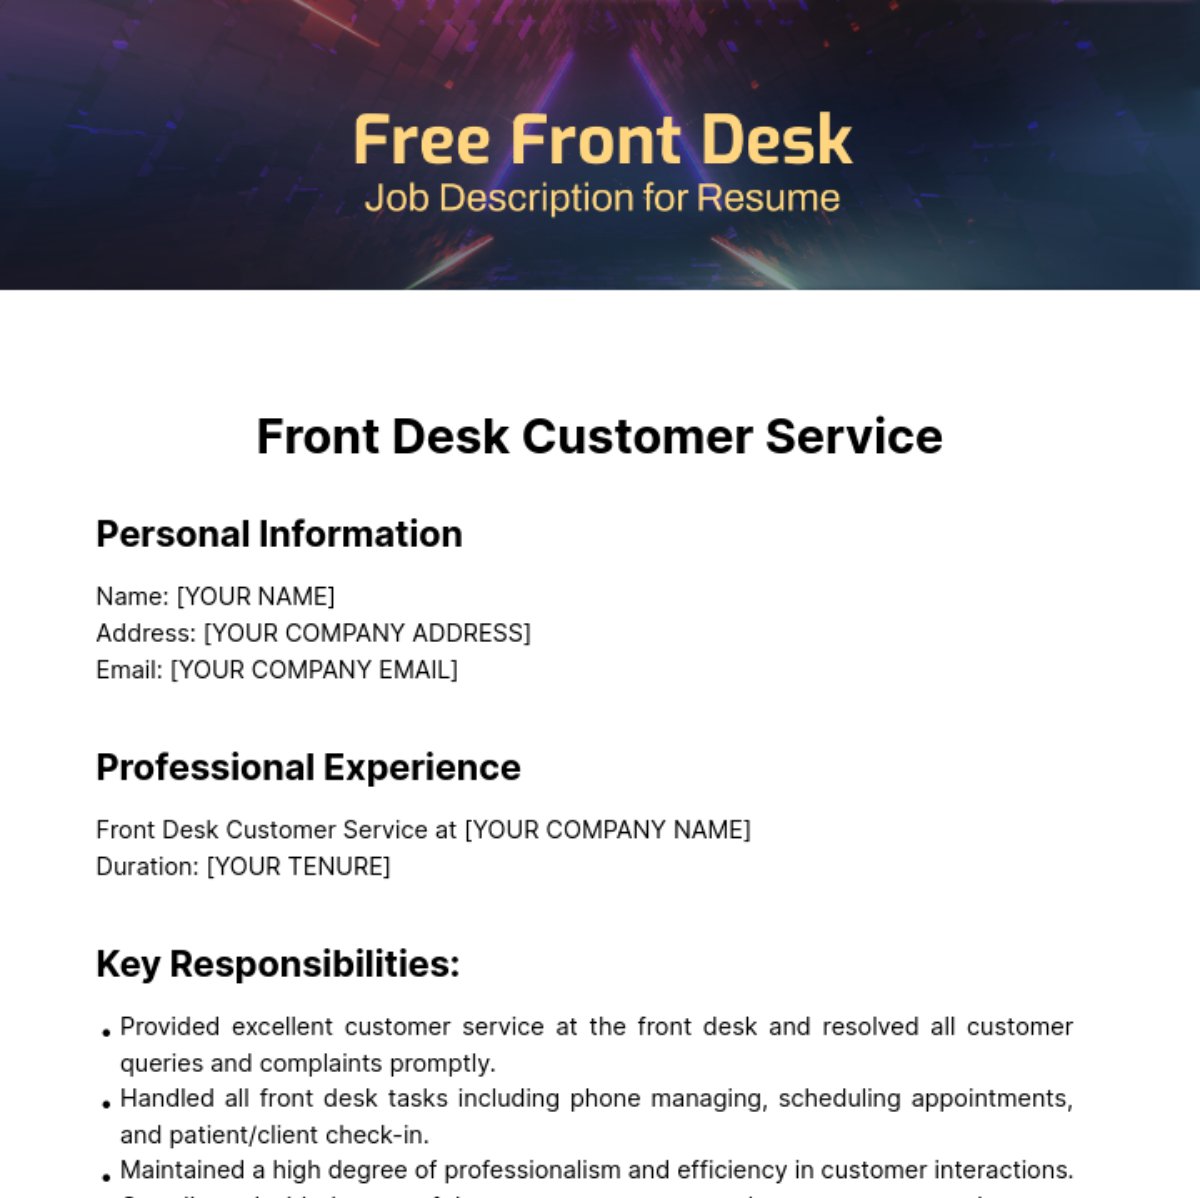 Front Desk Job Description for Resume Template